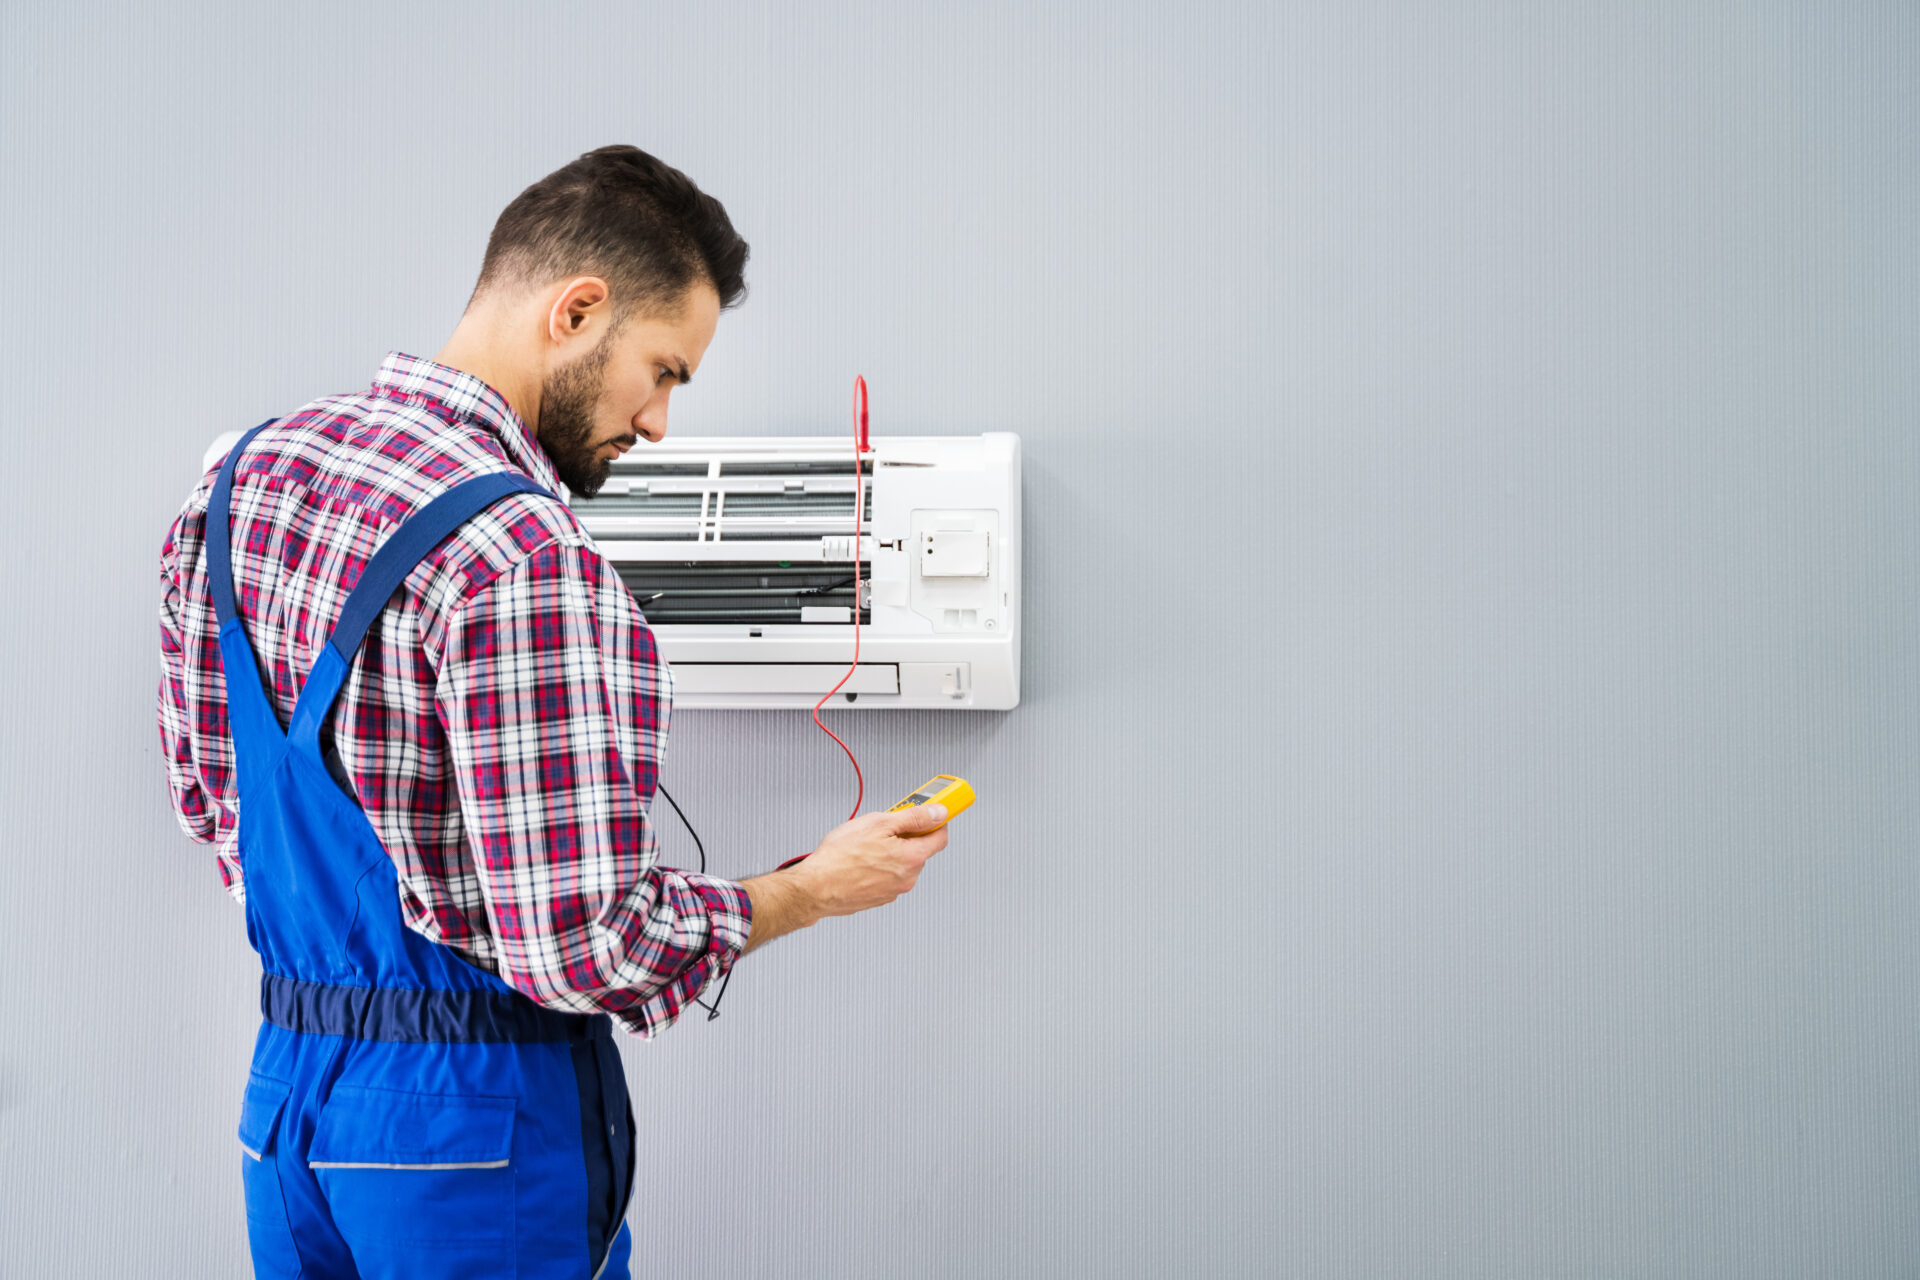 A man in a checkered shirt checks the operation of an air conditioner repair.